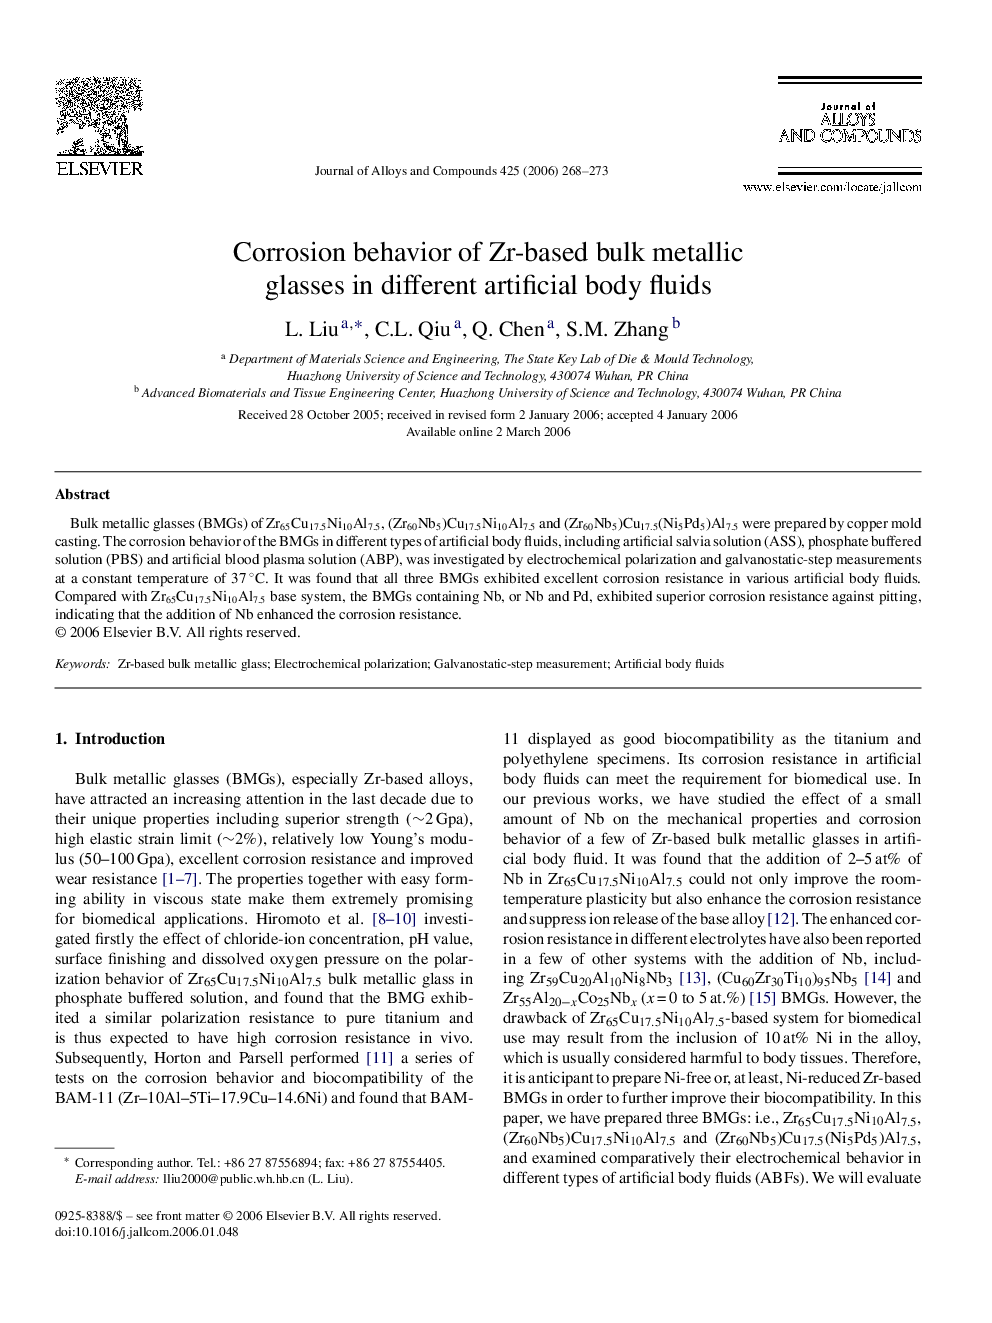 Corrosion behavior of Zr-based bulk metallic glasses in different artificial body fluids